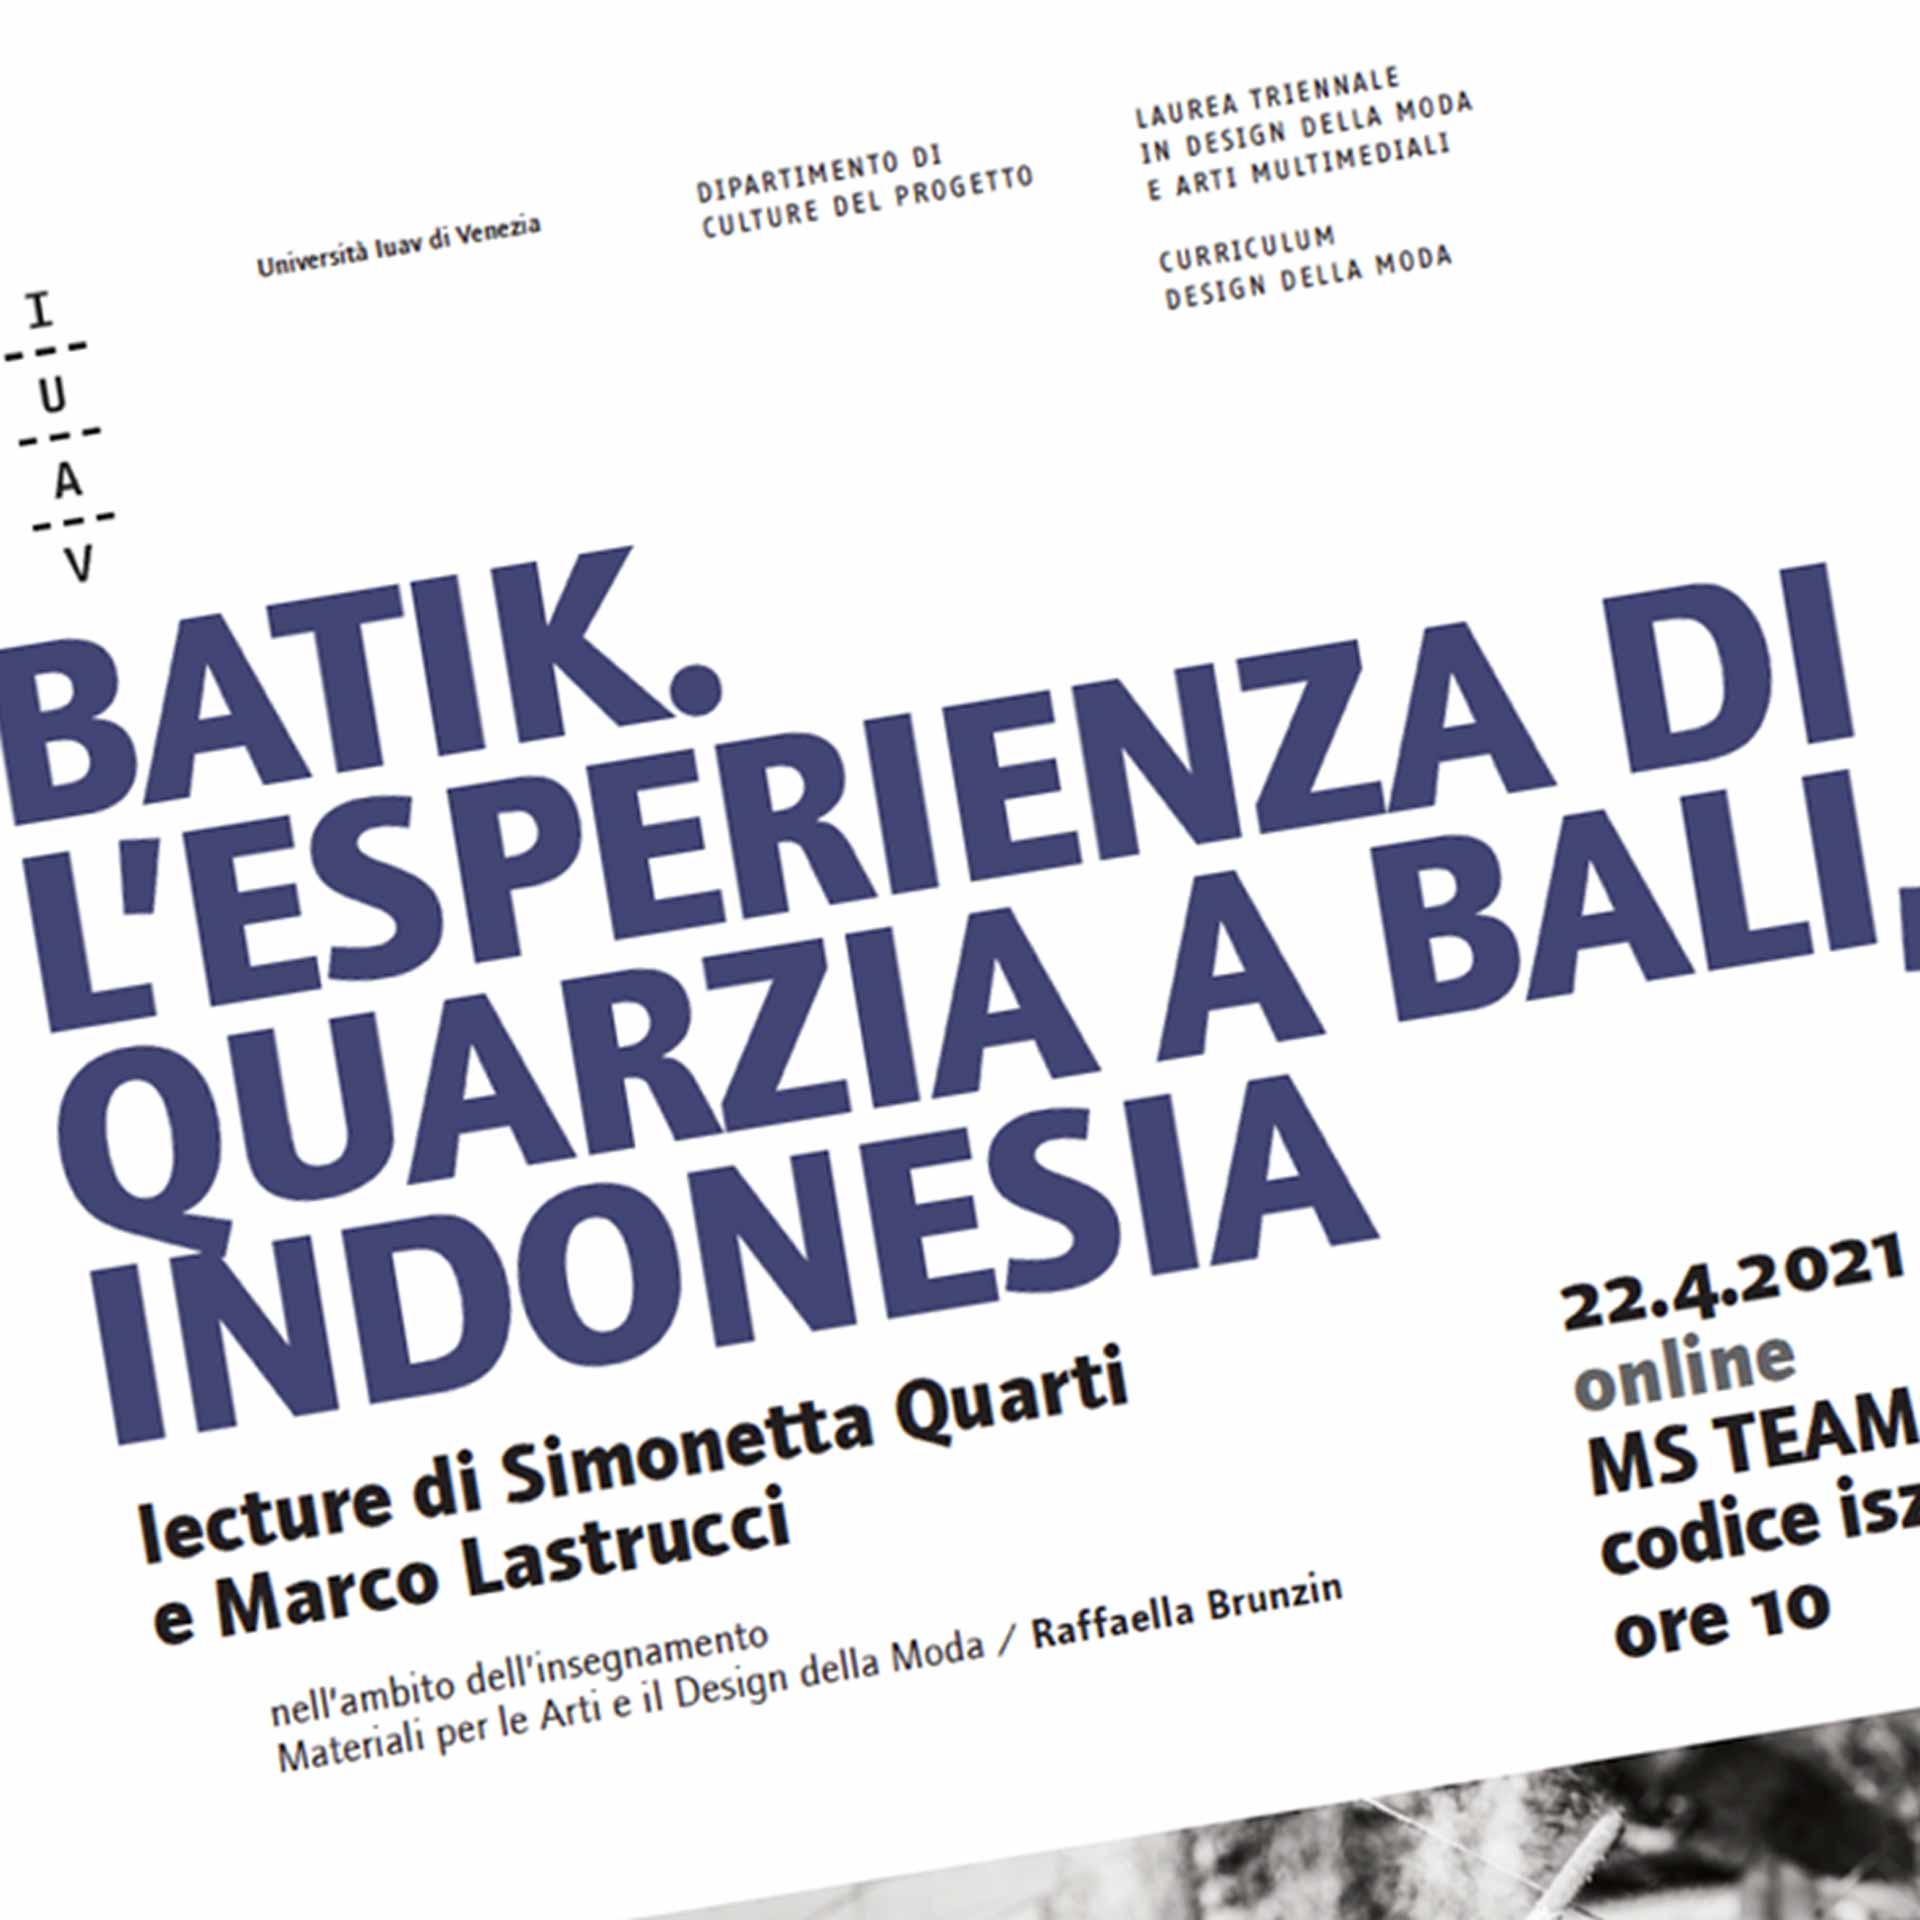 Batik Lecture For Architecture University Venezia Italy Quarzia